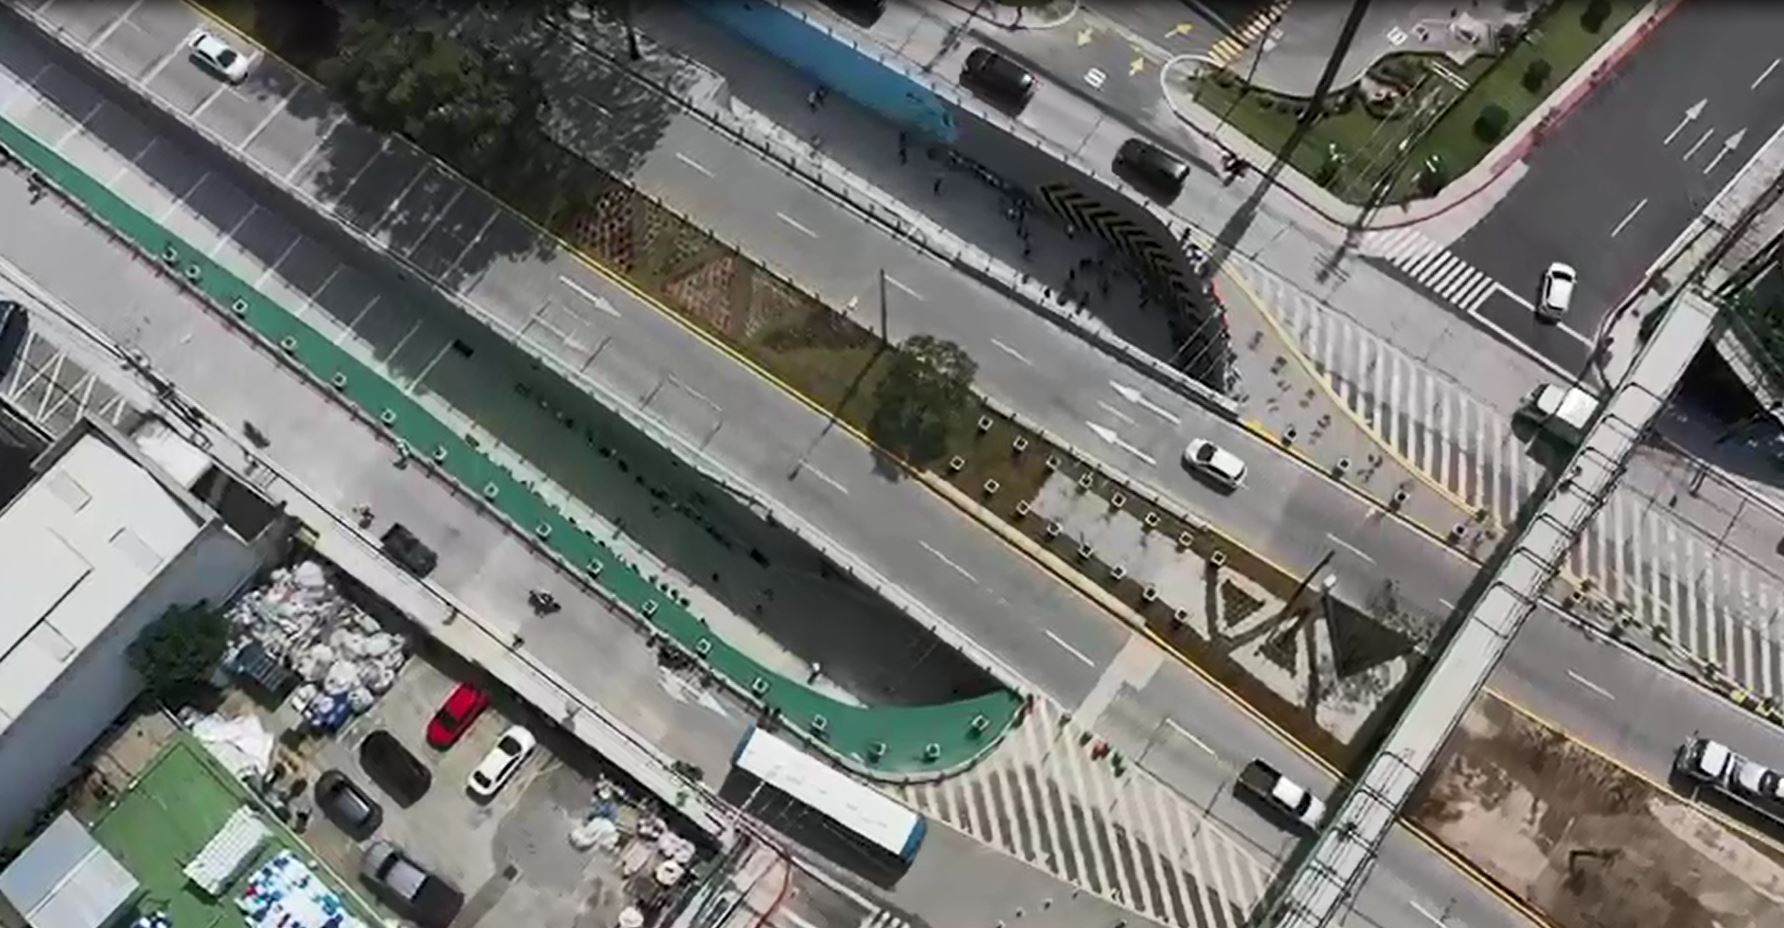 Los cierres en la avenida Petapa se efectuarán a partir del sábado 18 de febrero de 2023, según la comuna capitalina. (Foto Prensa Libre: Captura de pantalla video Municipalidad de Guatemala)